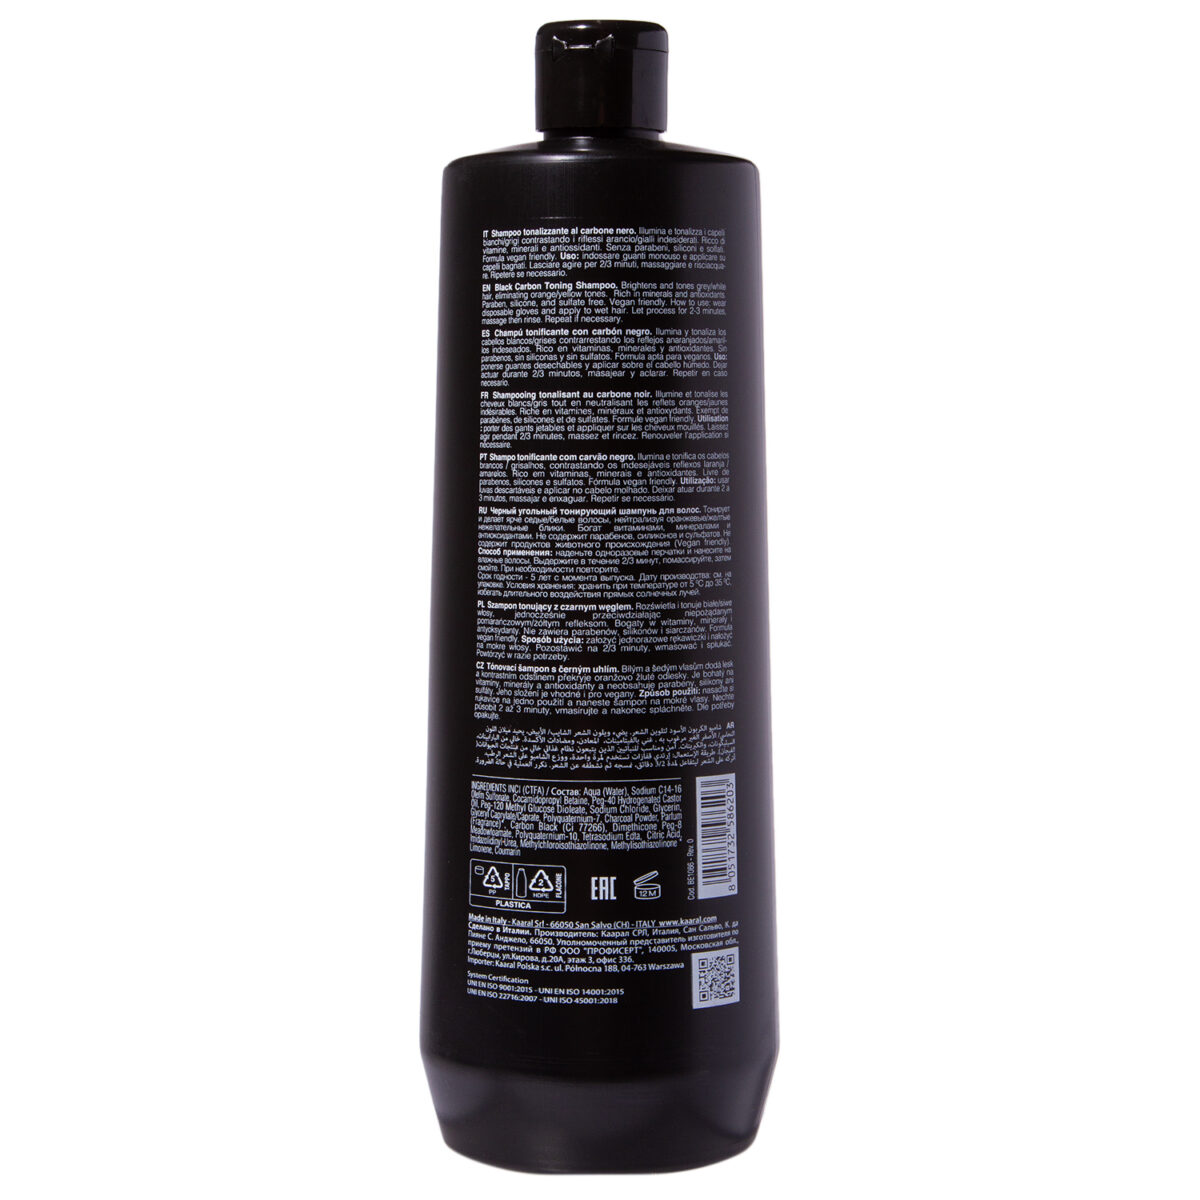 KP_BE1086, BLONDE ELEVATION CHARCOAL SHAMPOO Черный угольный тонирующий шампунь для волос, 1000 мл, KAARAL